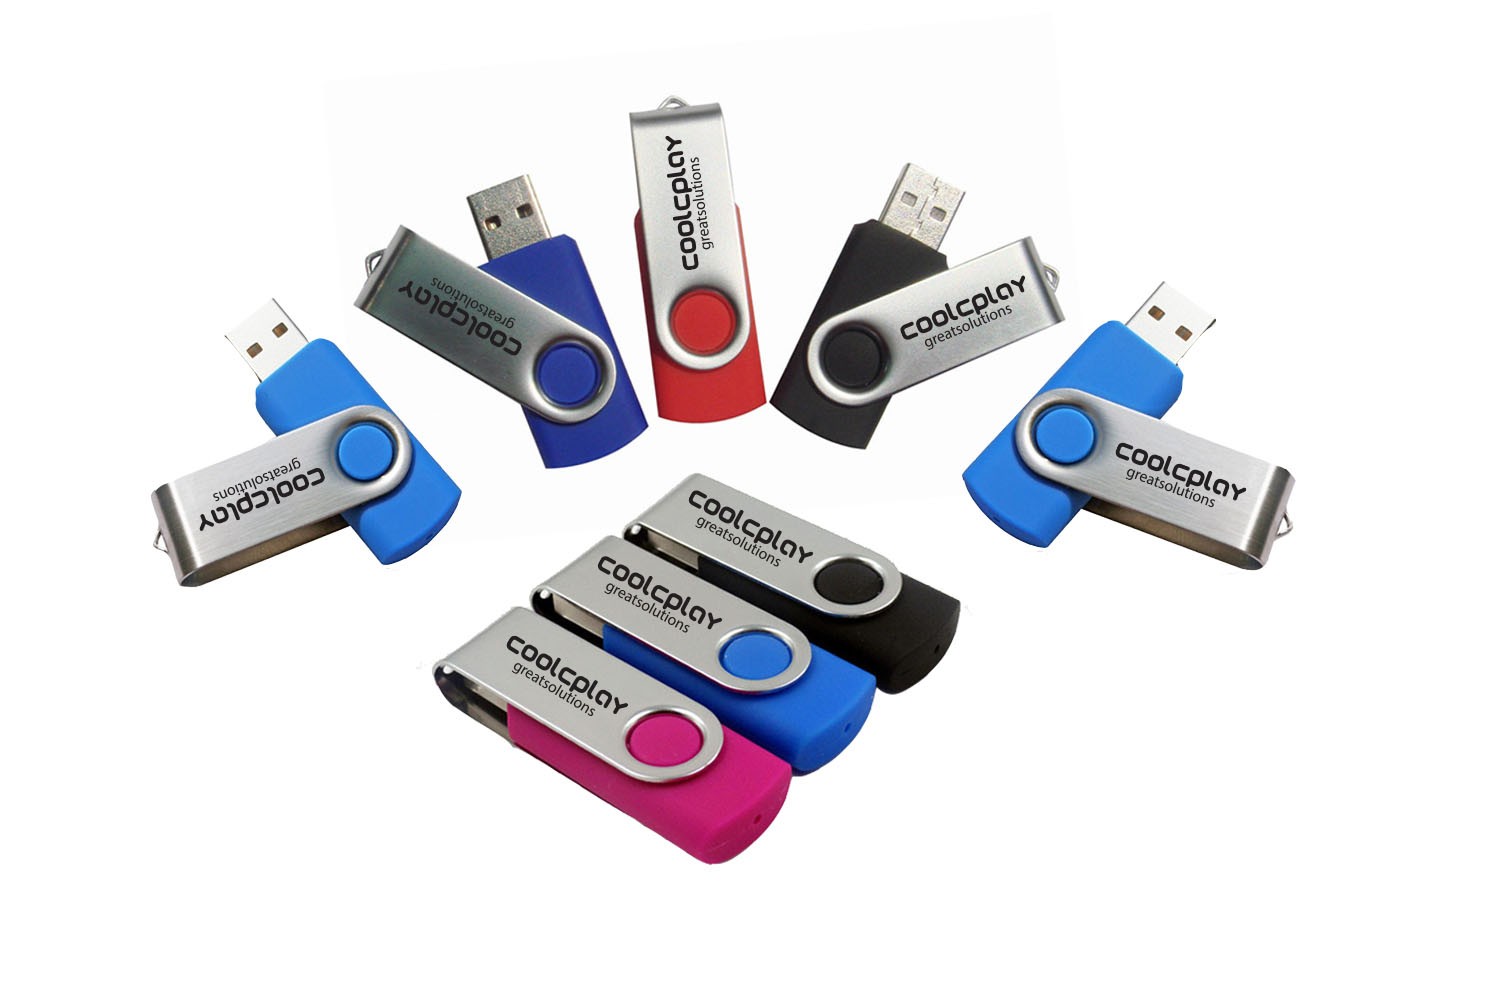 Colorful 128 MB USB Flashdrive With Swivel Cap